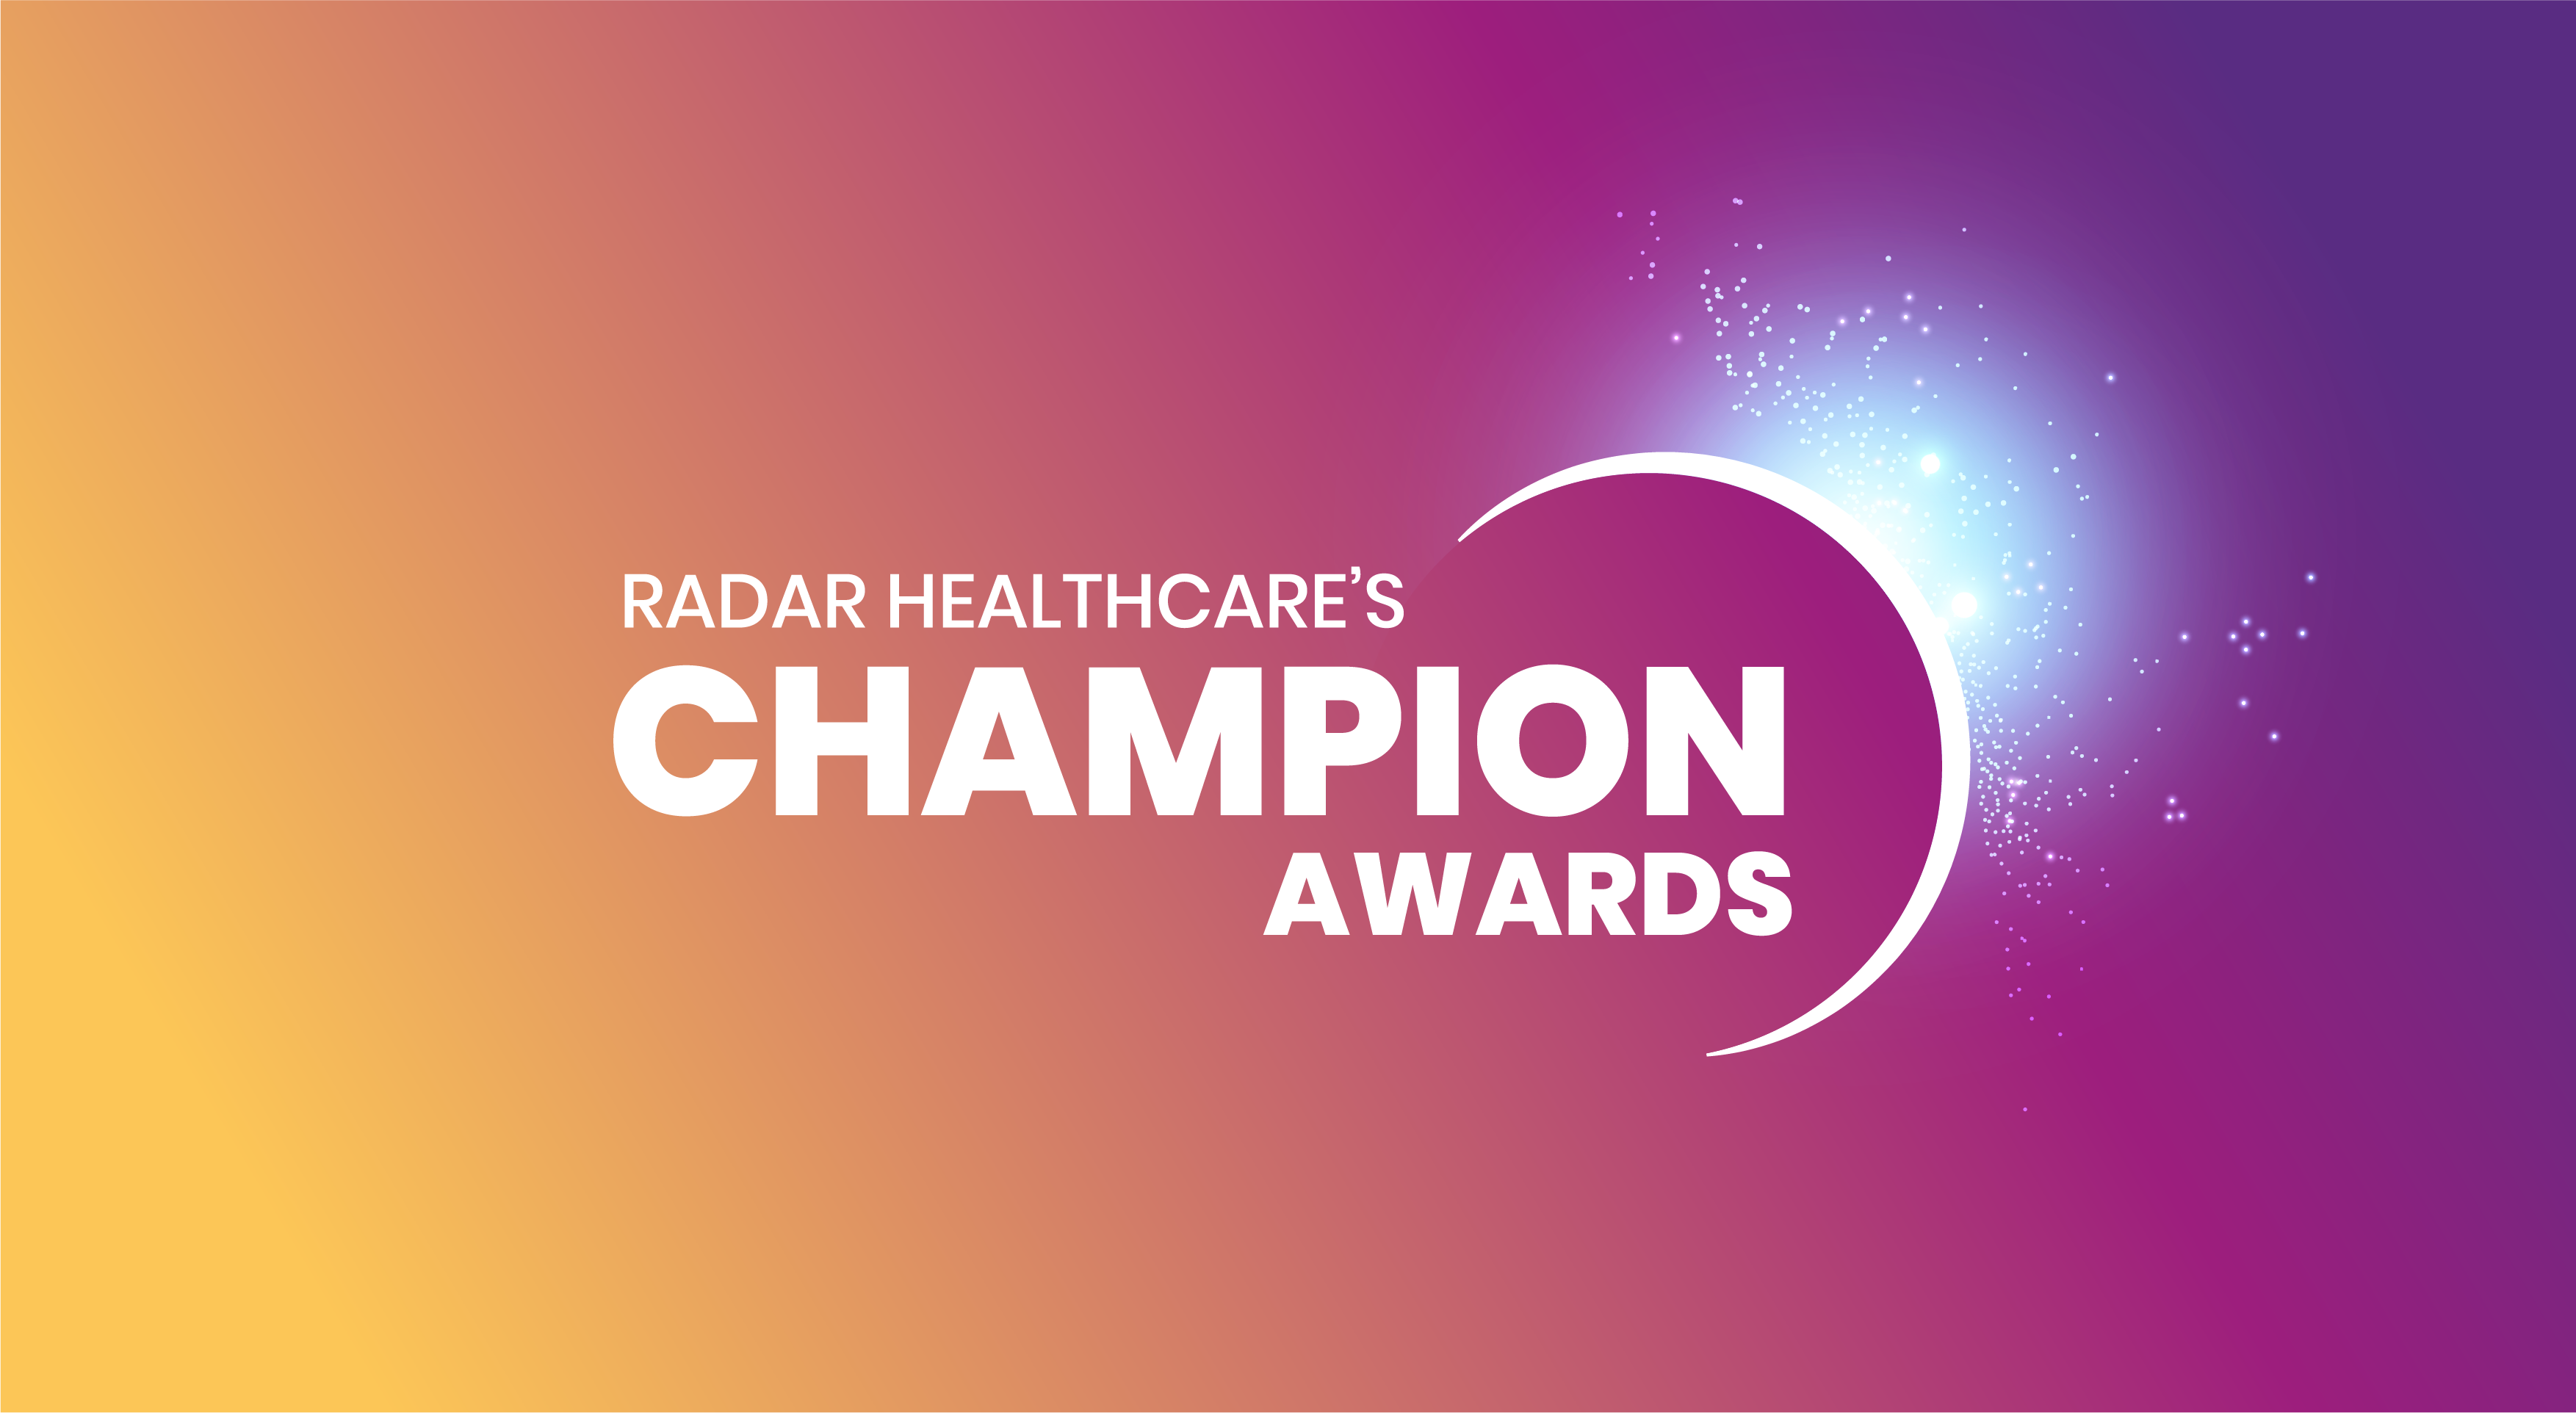 Radar Healthcare's Champion Awards